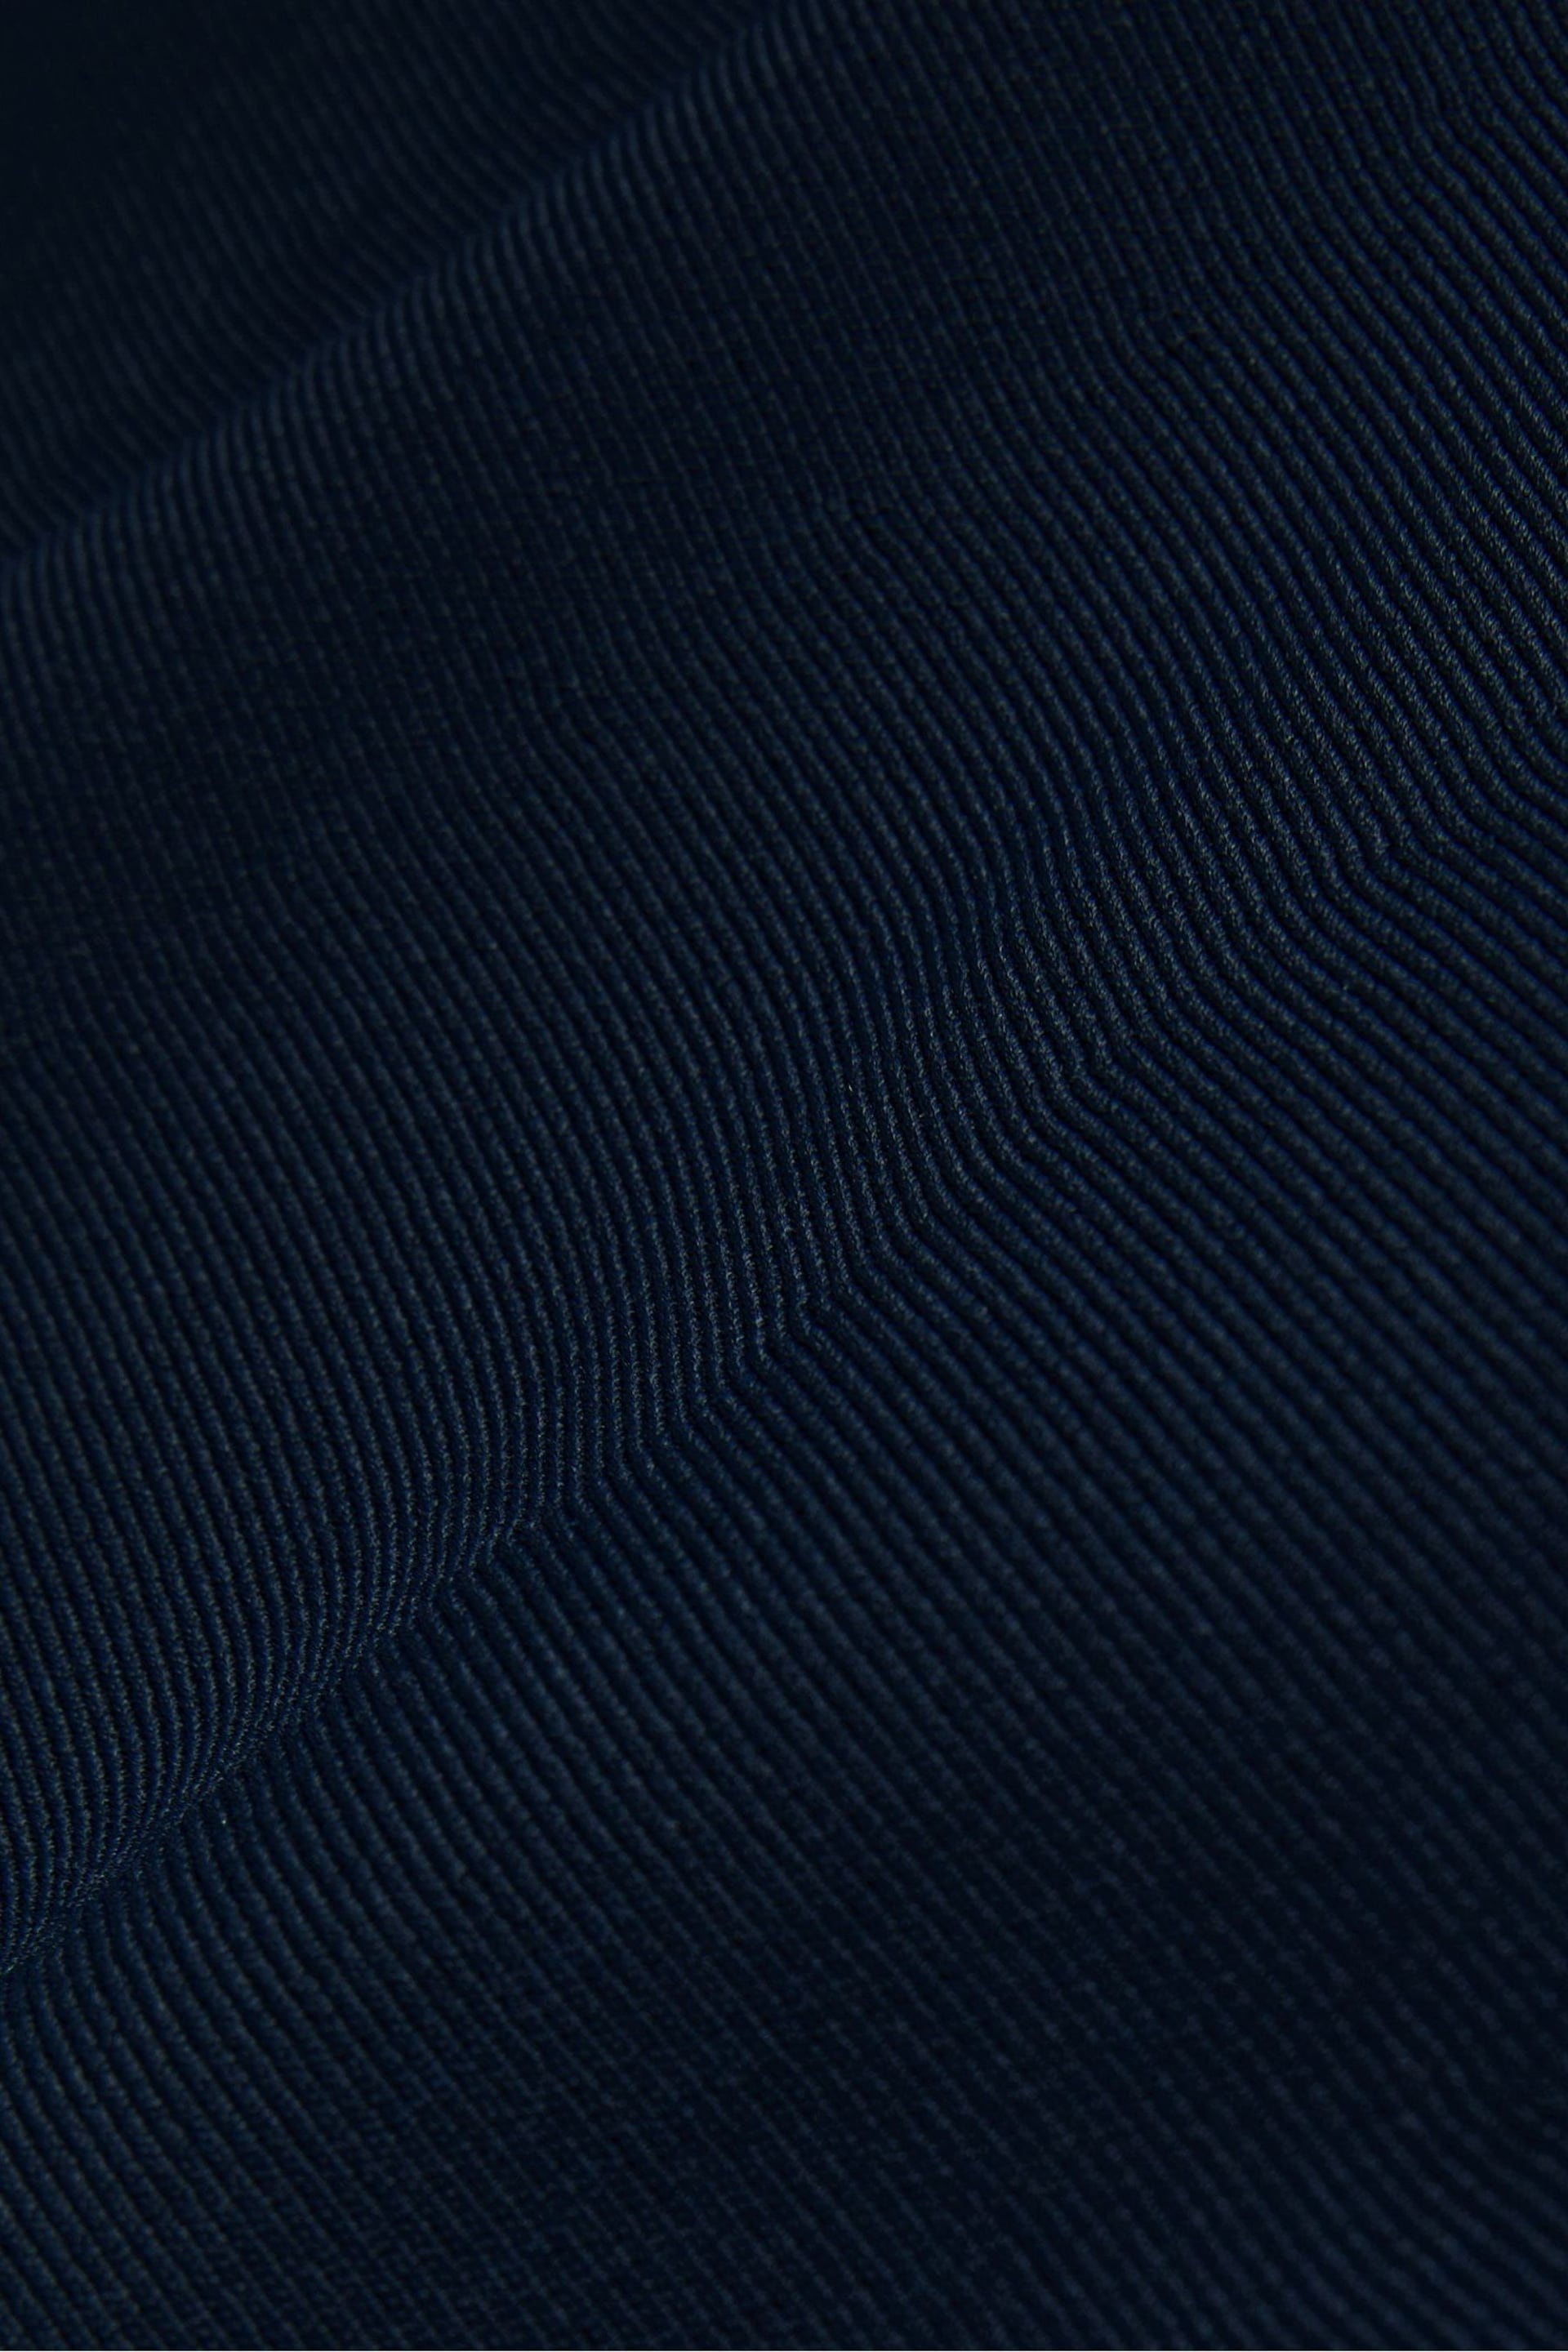 Ted Baker Blue Hillder Delicate Pointelle Knit Dress - Image 5 of 6